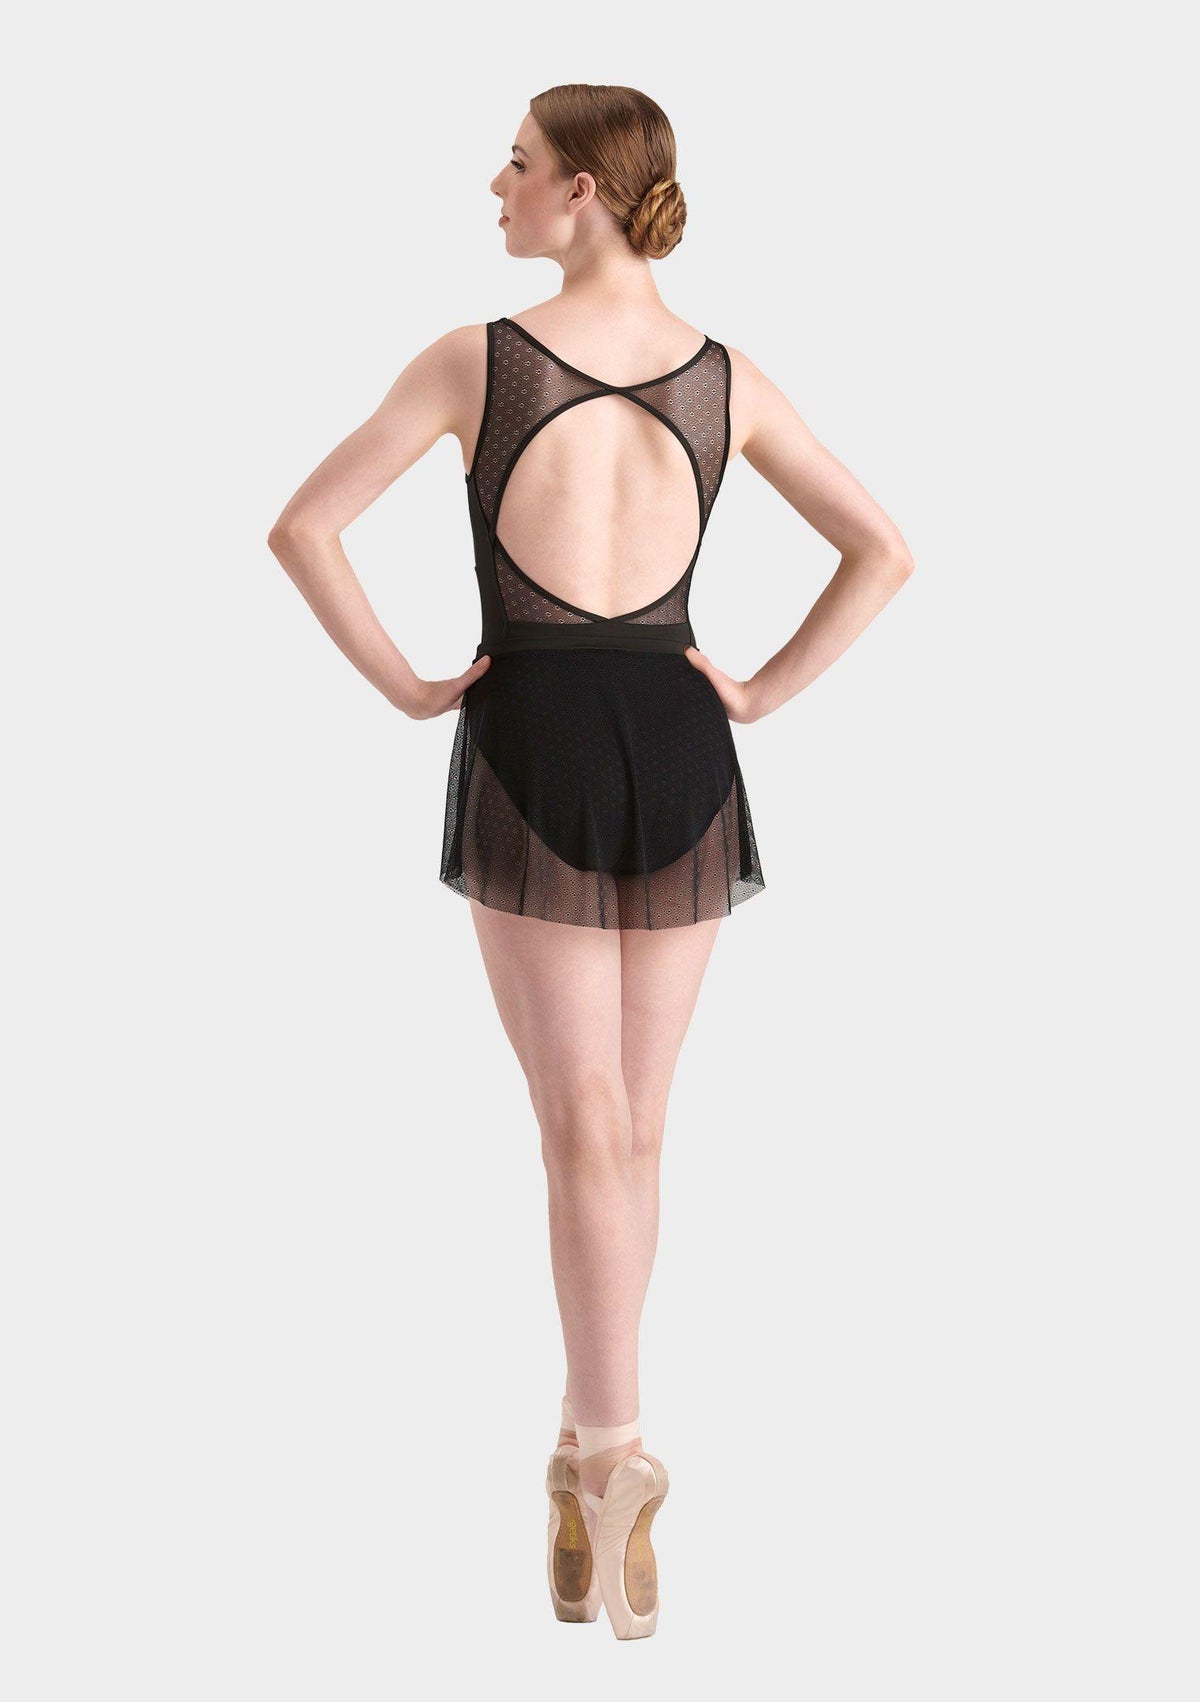 Dance Skirts, Ballet Skirts & Tutus. – Upstage Dancewear & Costume Factory